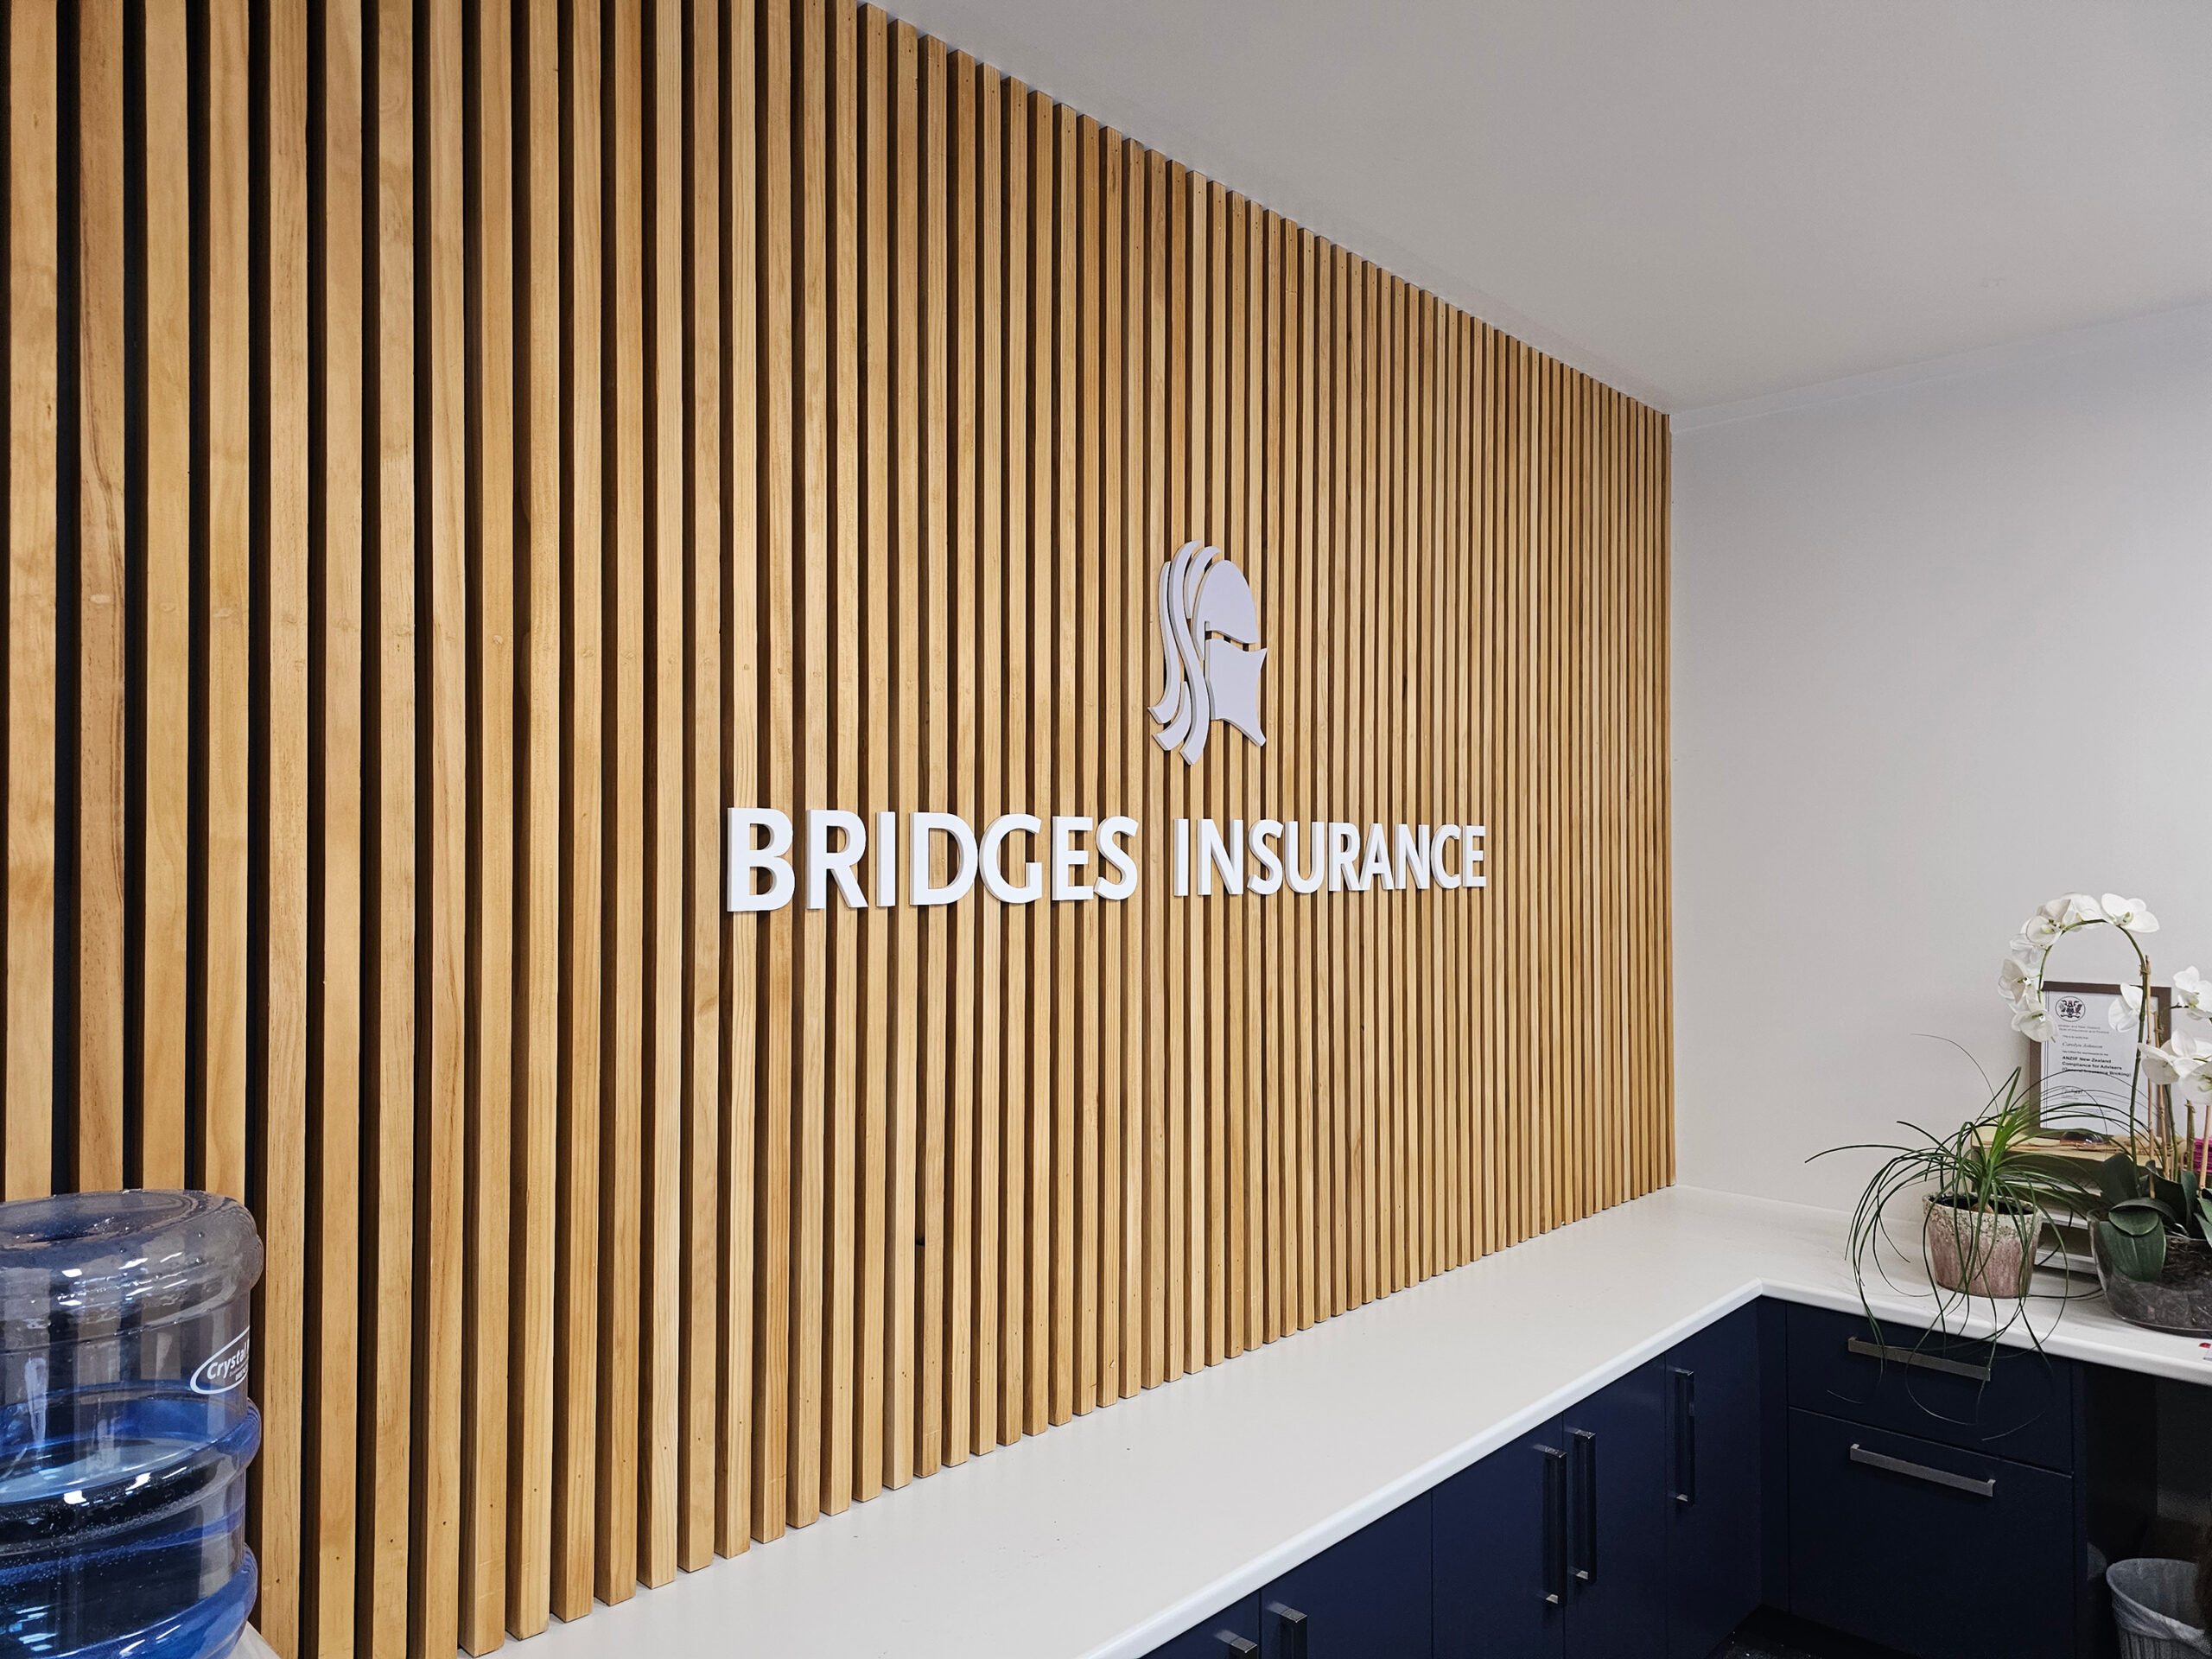 3D laser cut of Bridges Insurance Logo